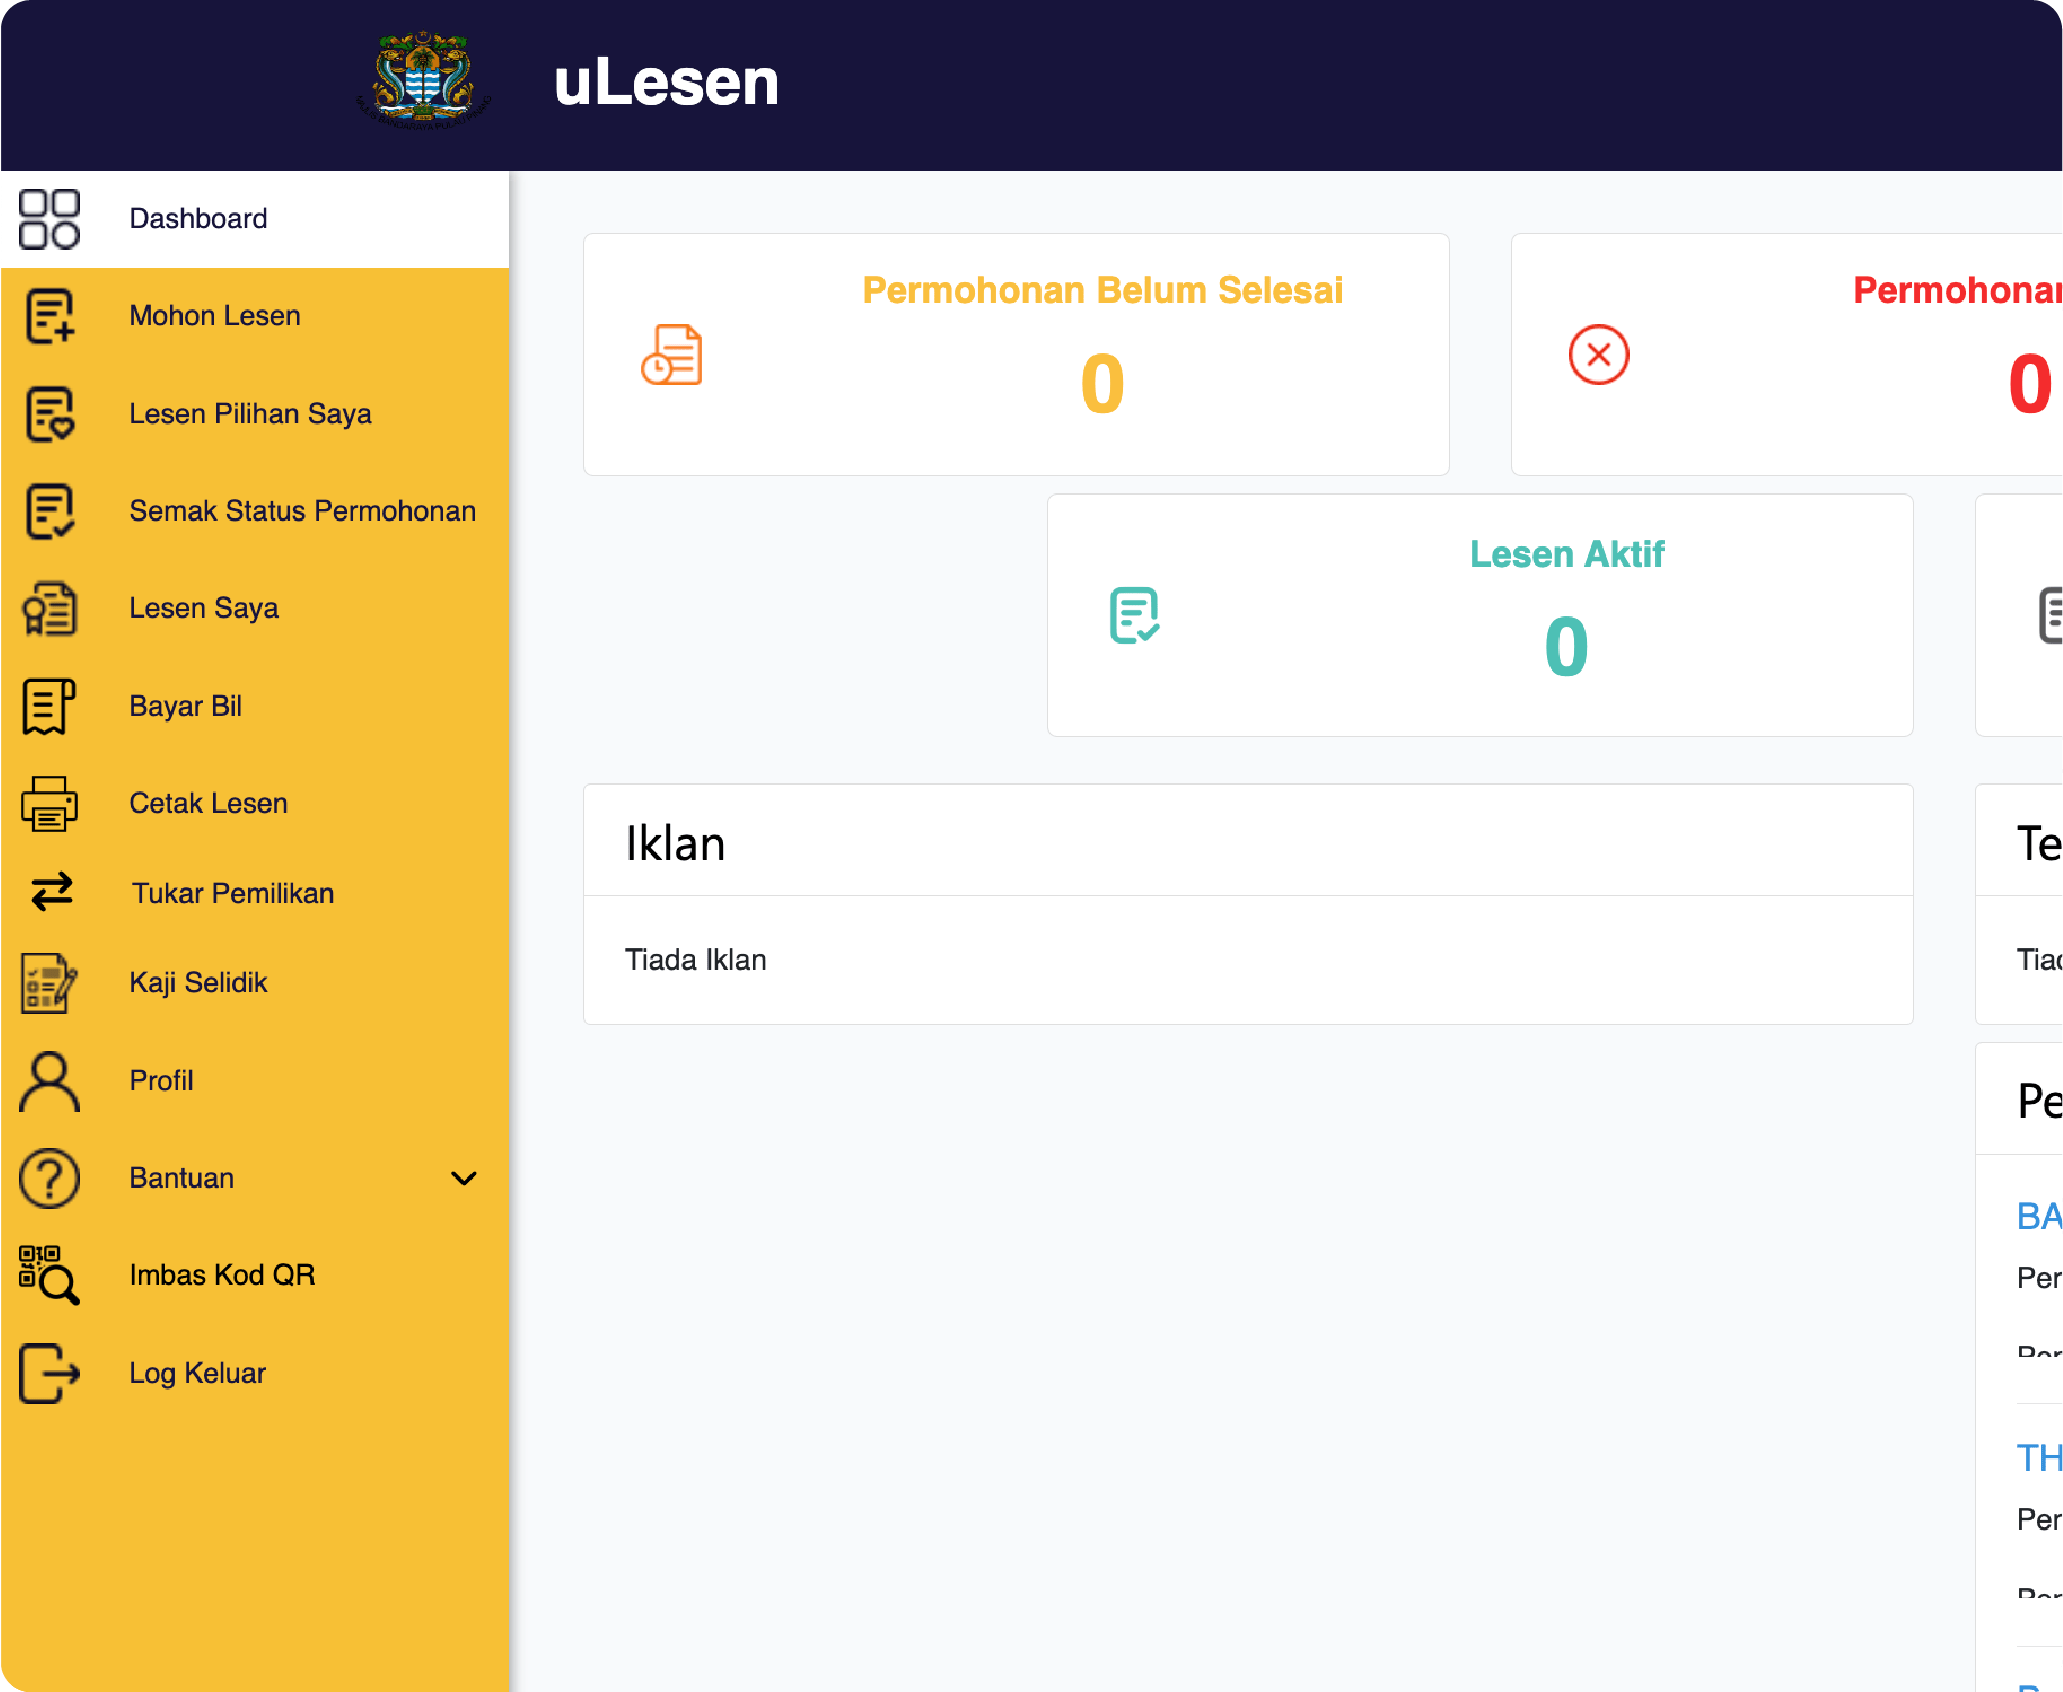 uLesen profile dashboard